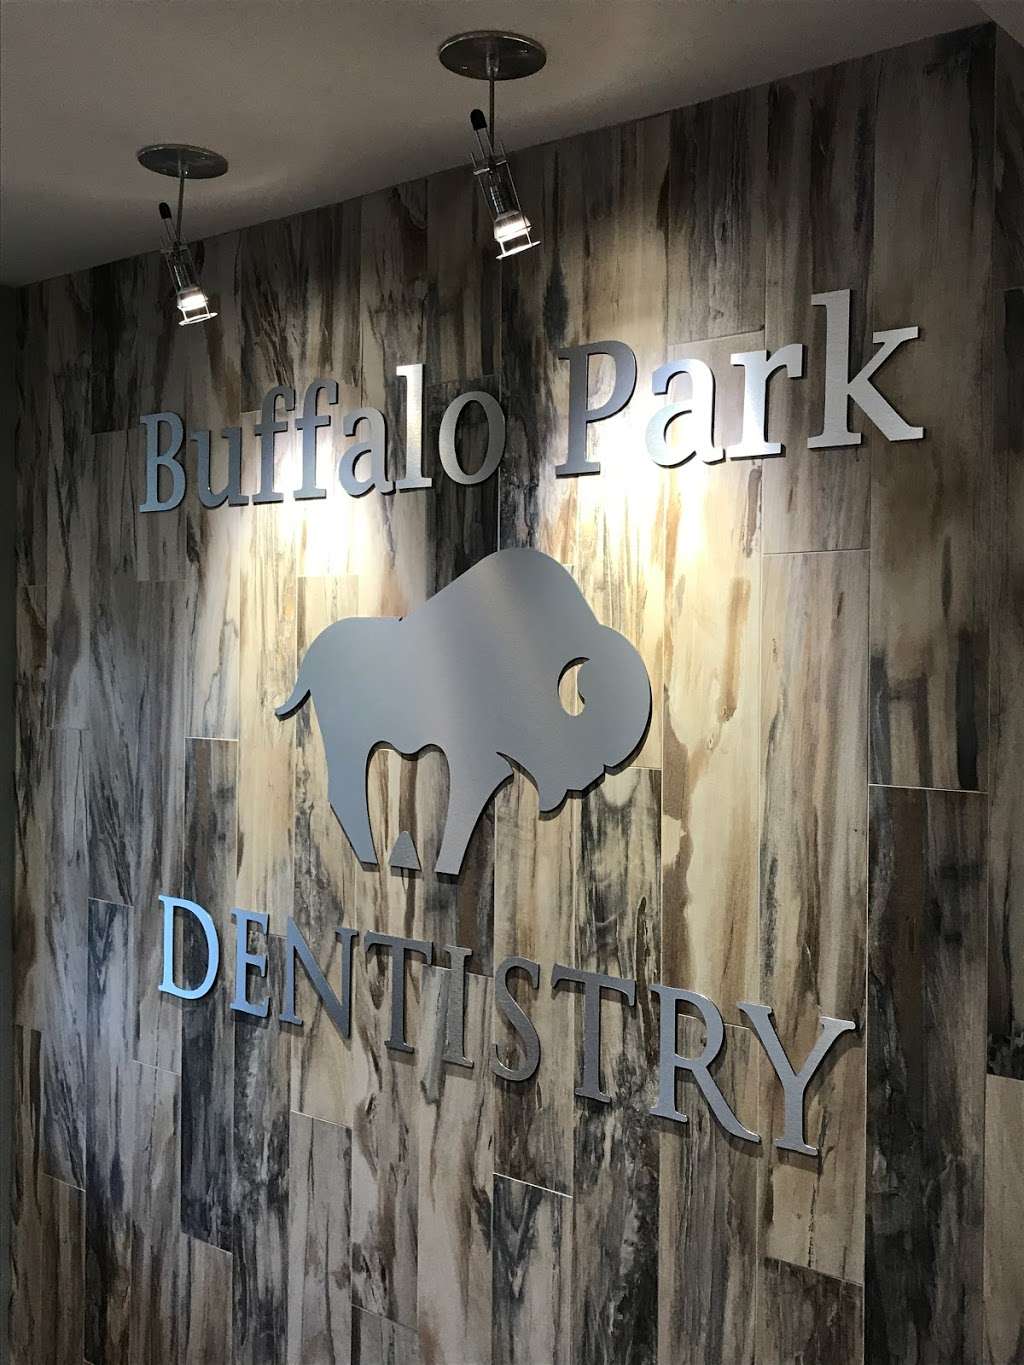 Buffalo Park Dentistry | 28577 Buffalo Park Rd Suite 260, Evergreen, CO 80439 | Phone: (303) 674-7741